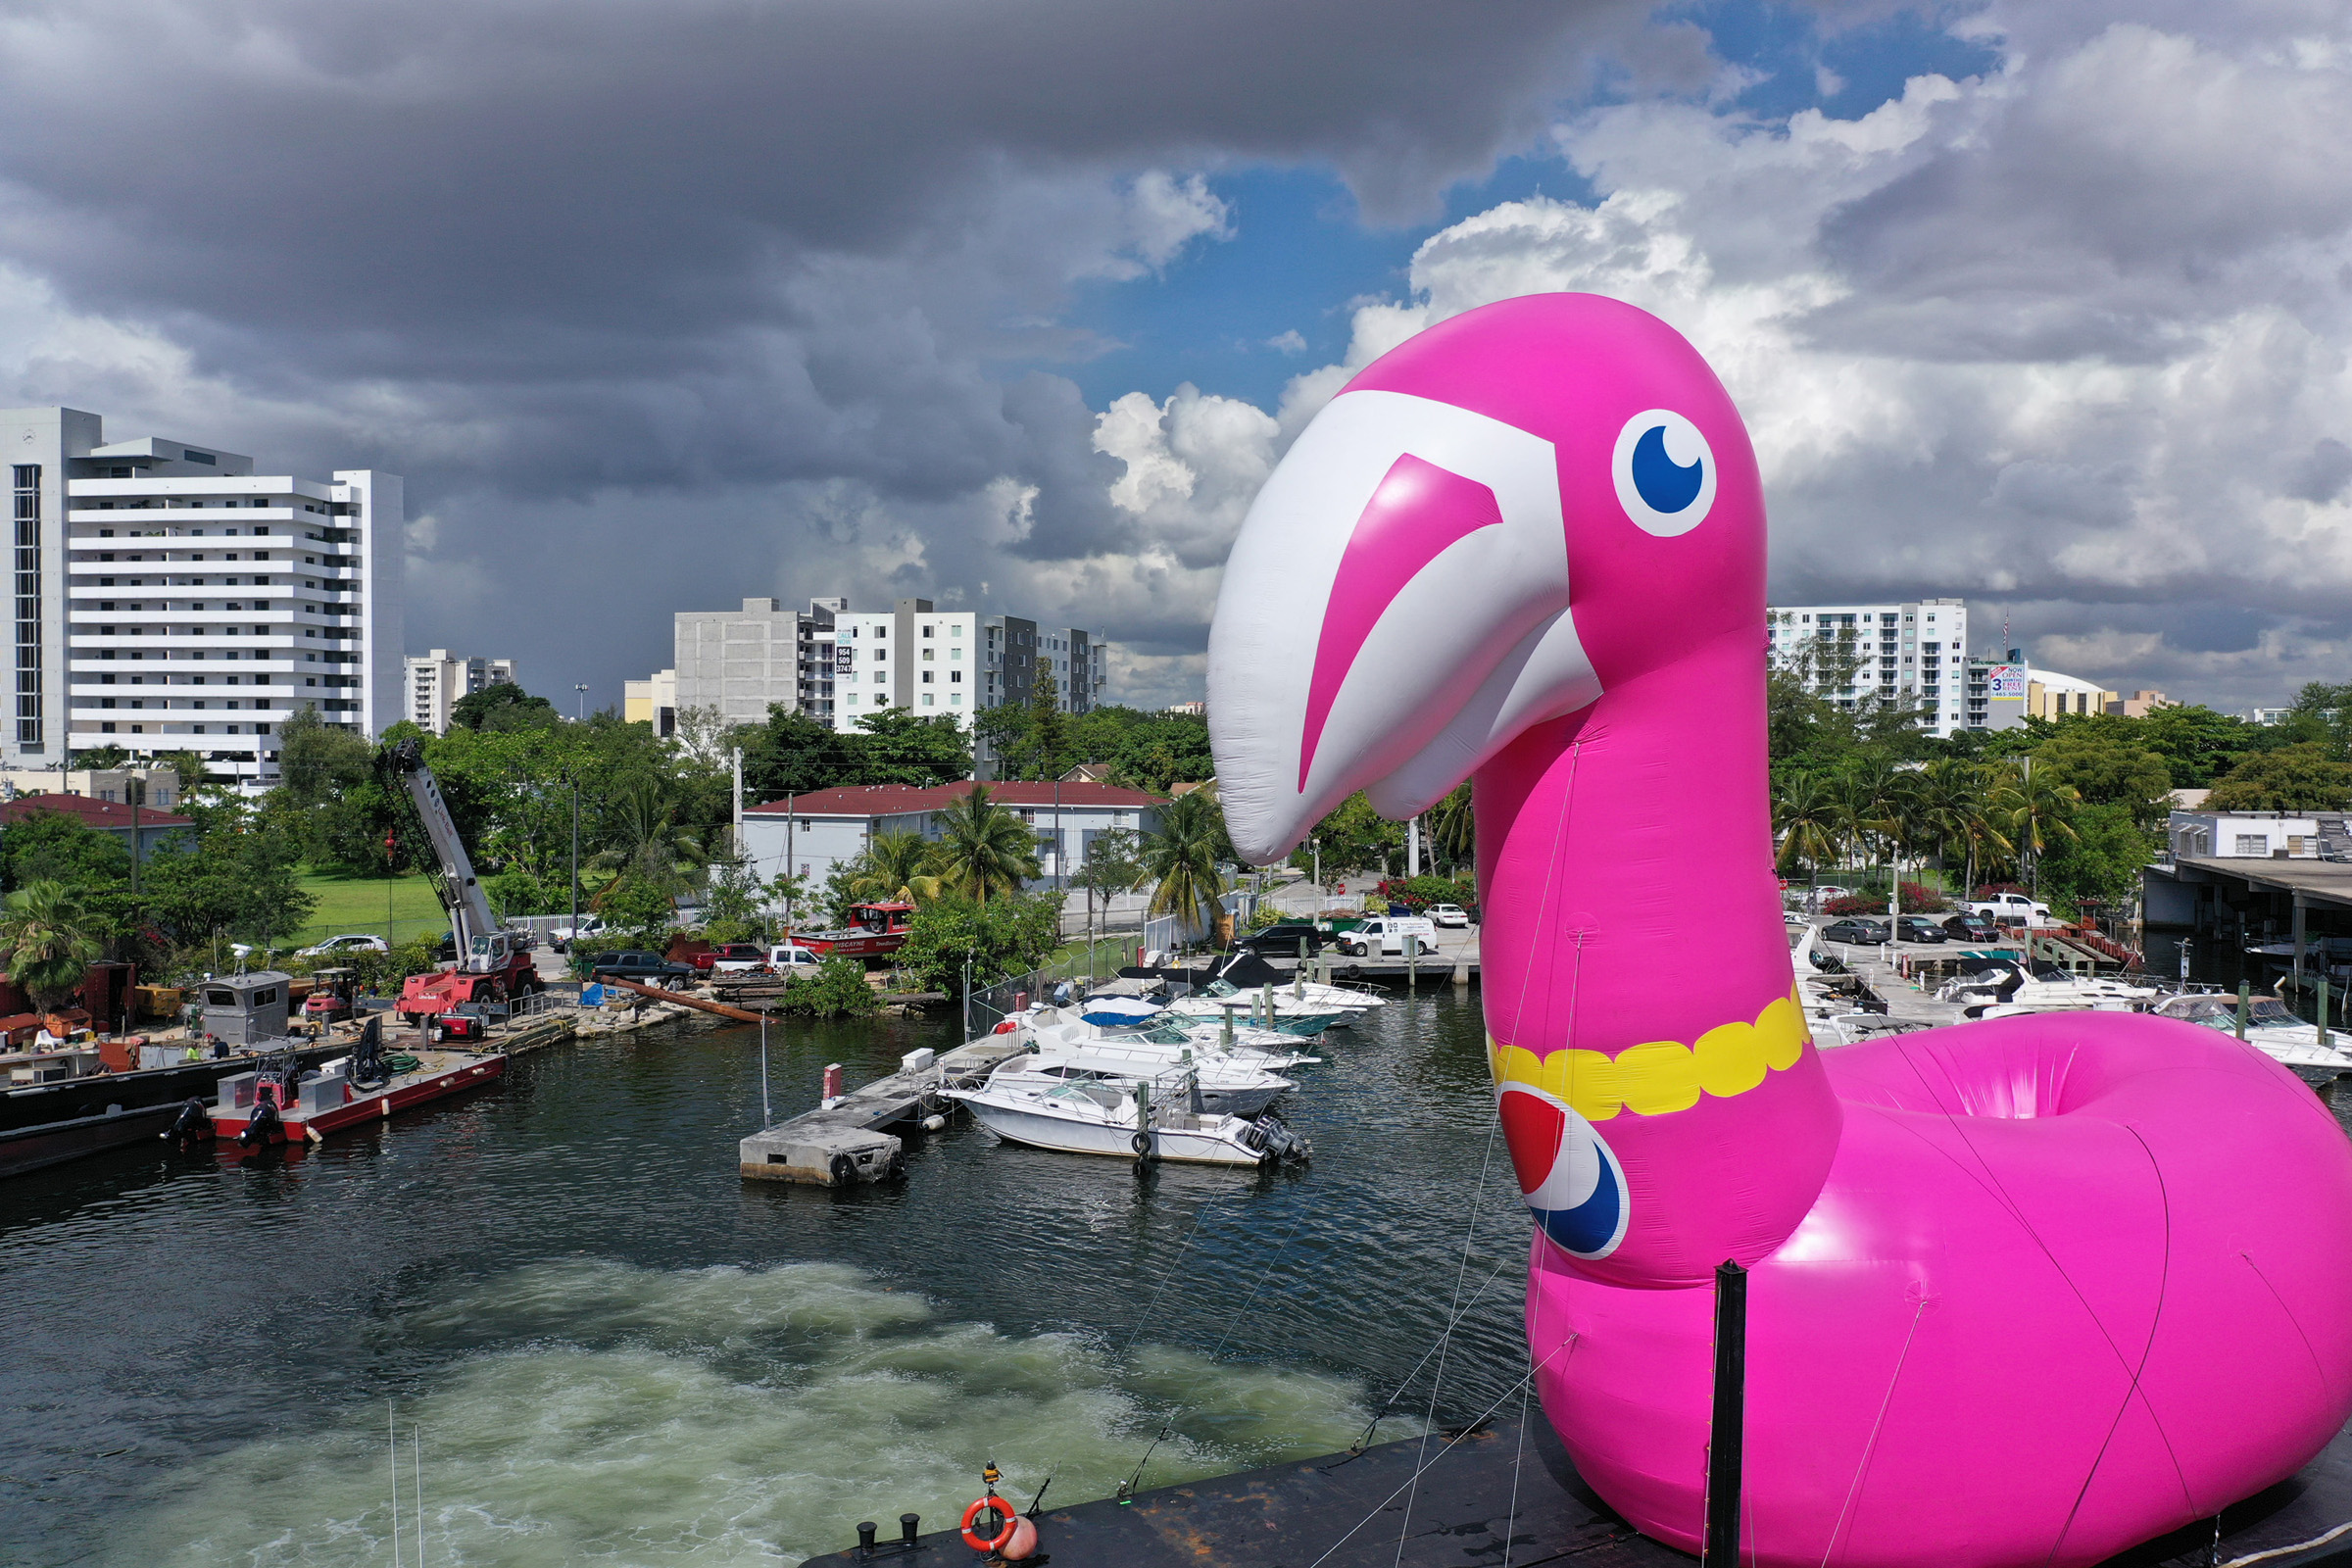 “Always Pool Ready” Pepsi #Summergram Flamingo along Biscayne Bay